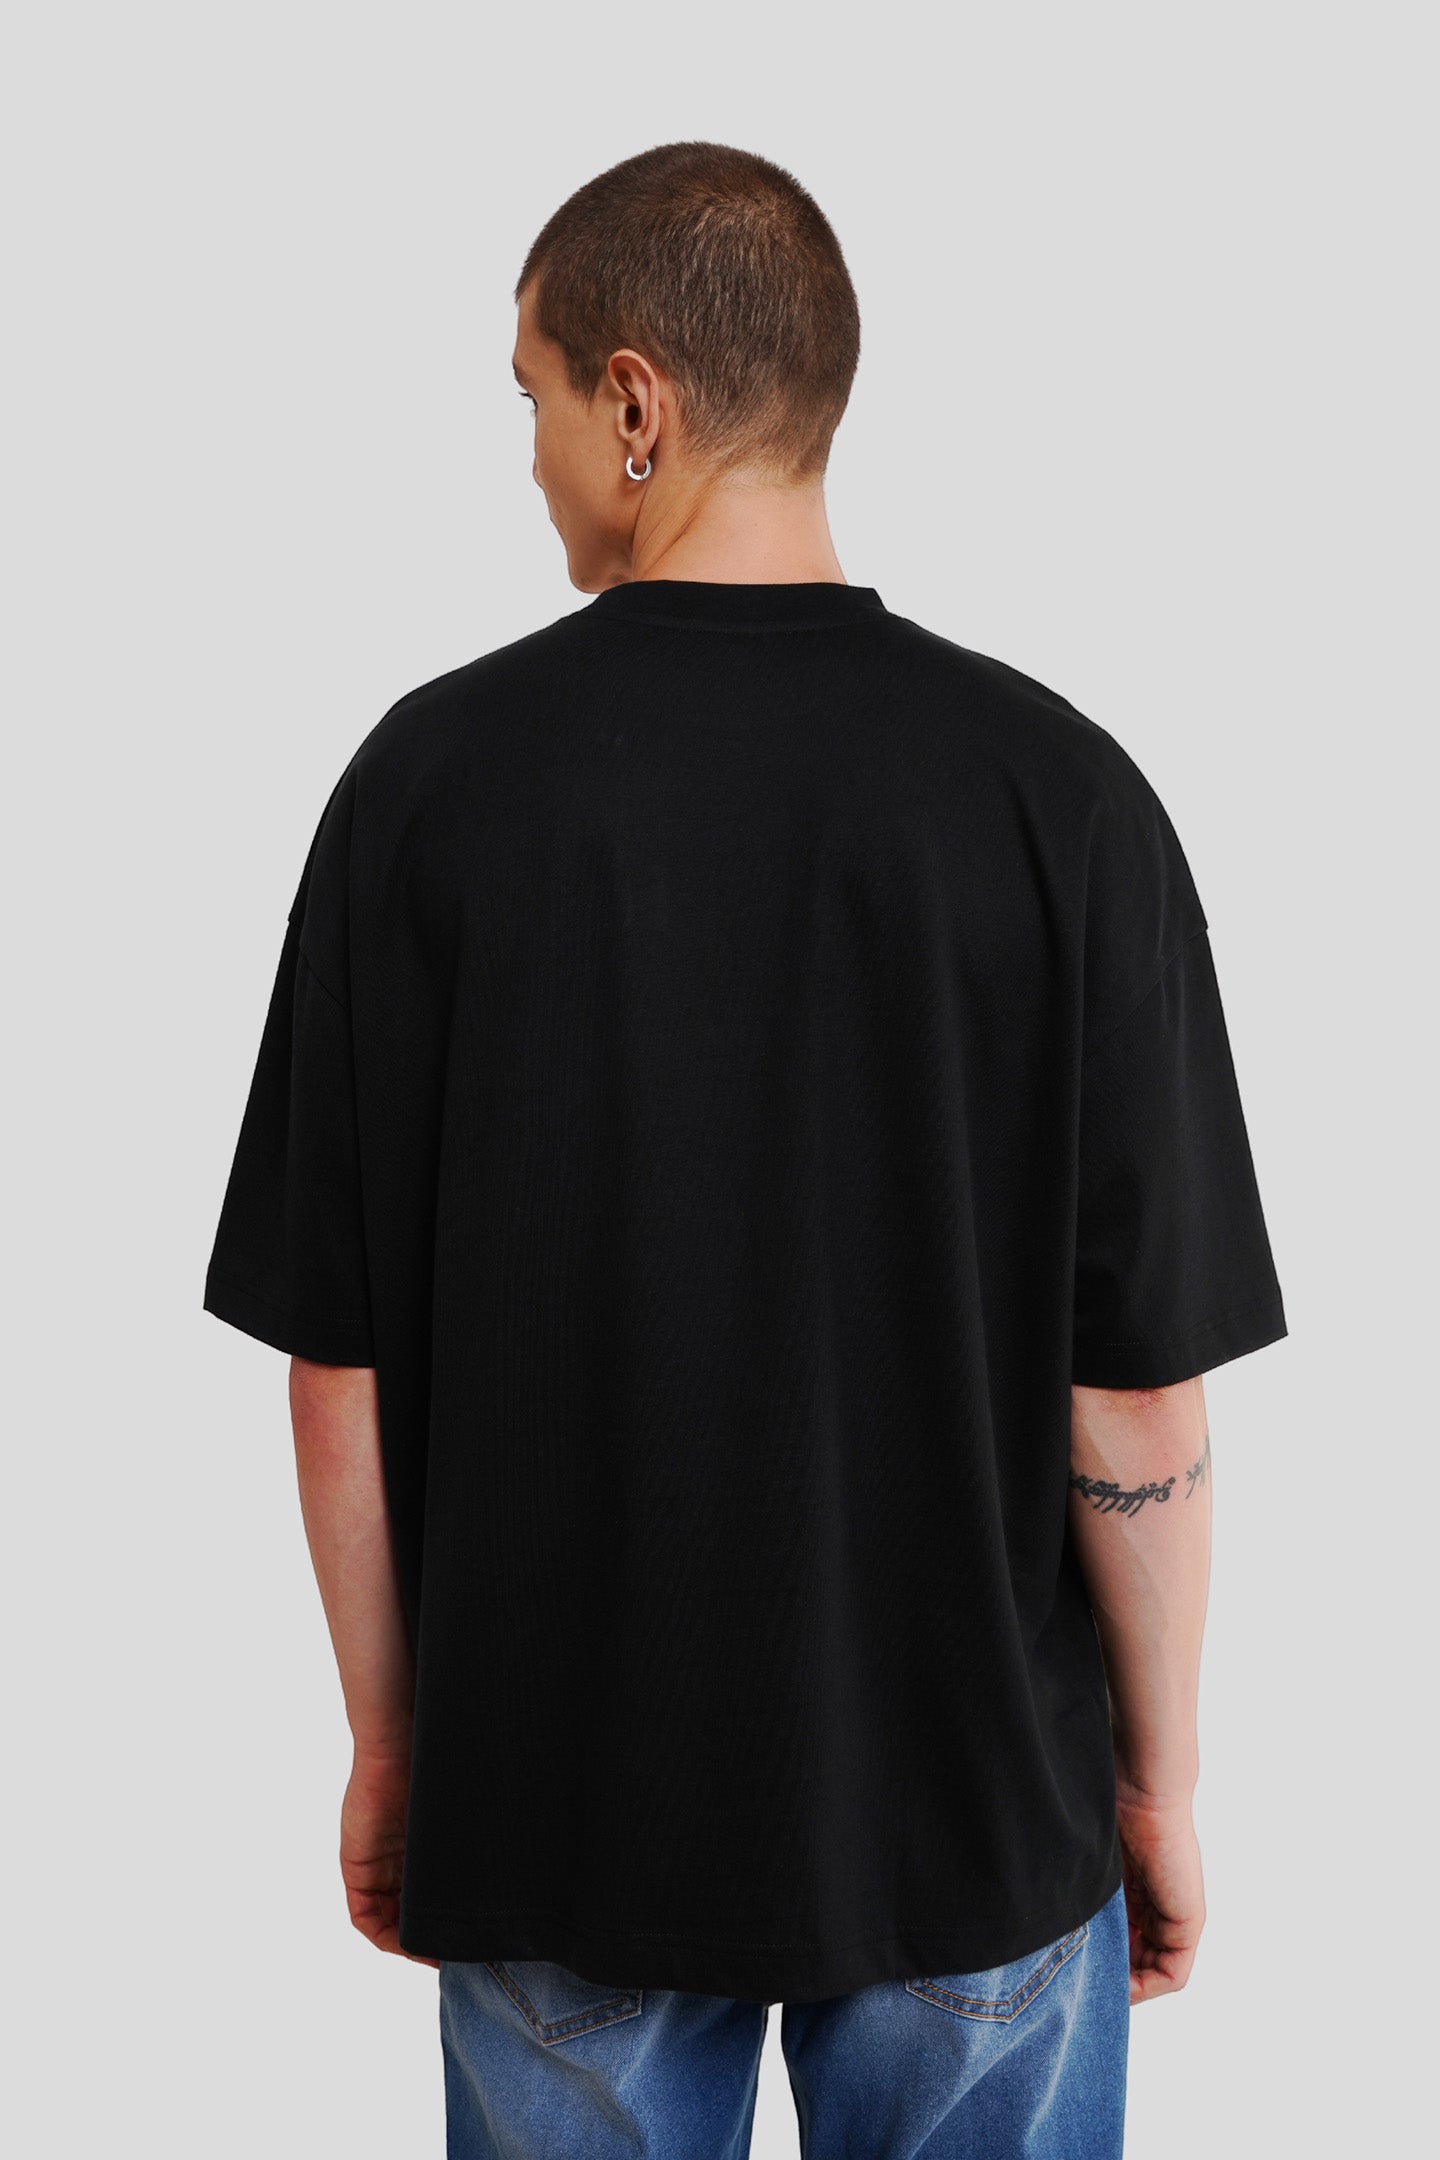 Free Style Typo Black Printed T-Shirt